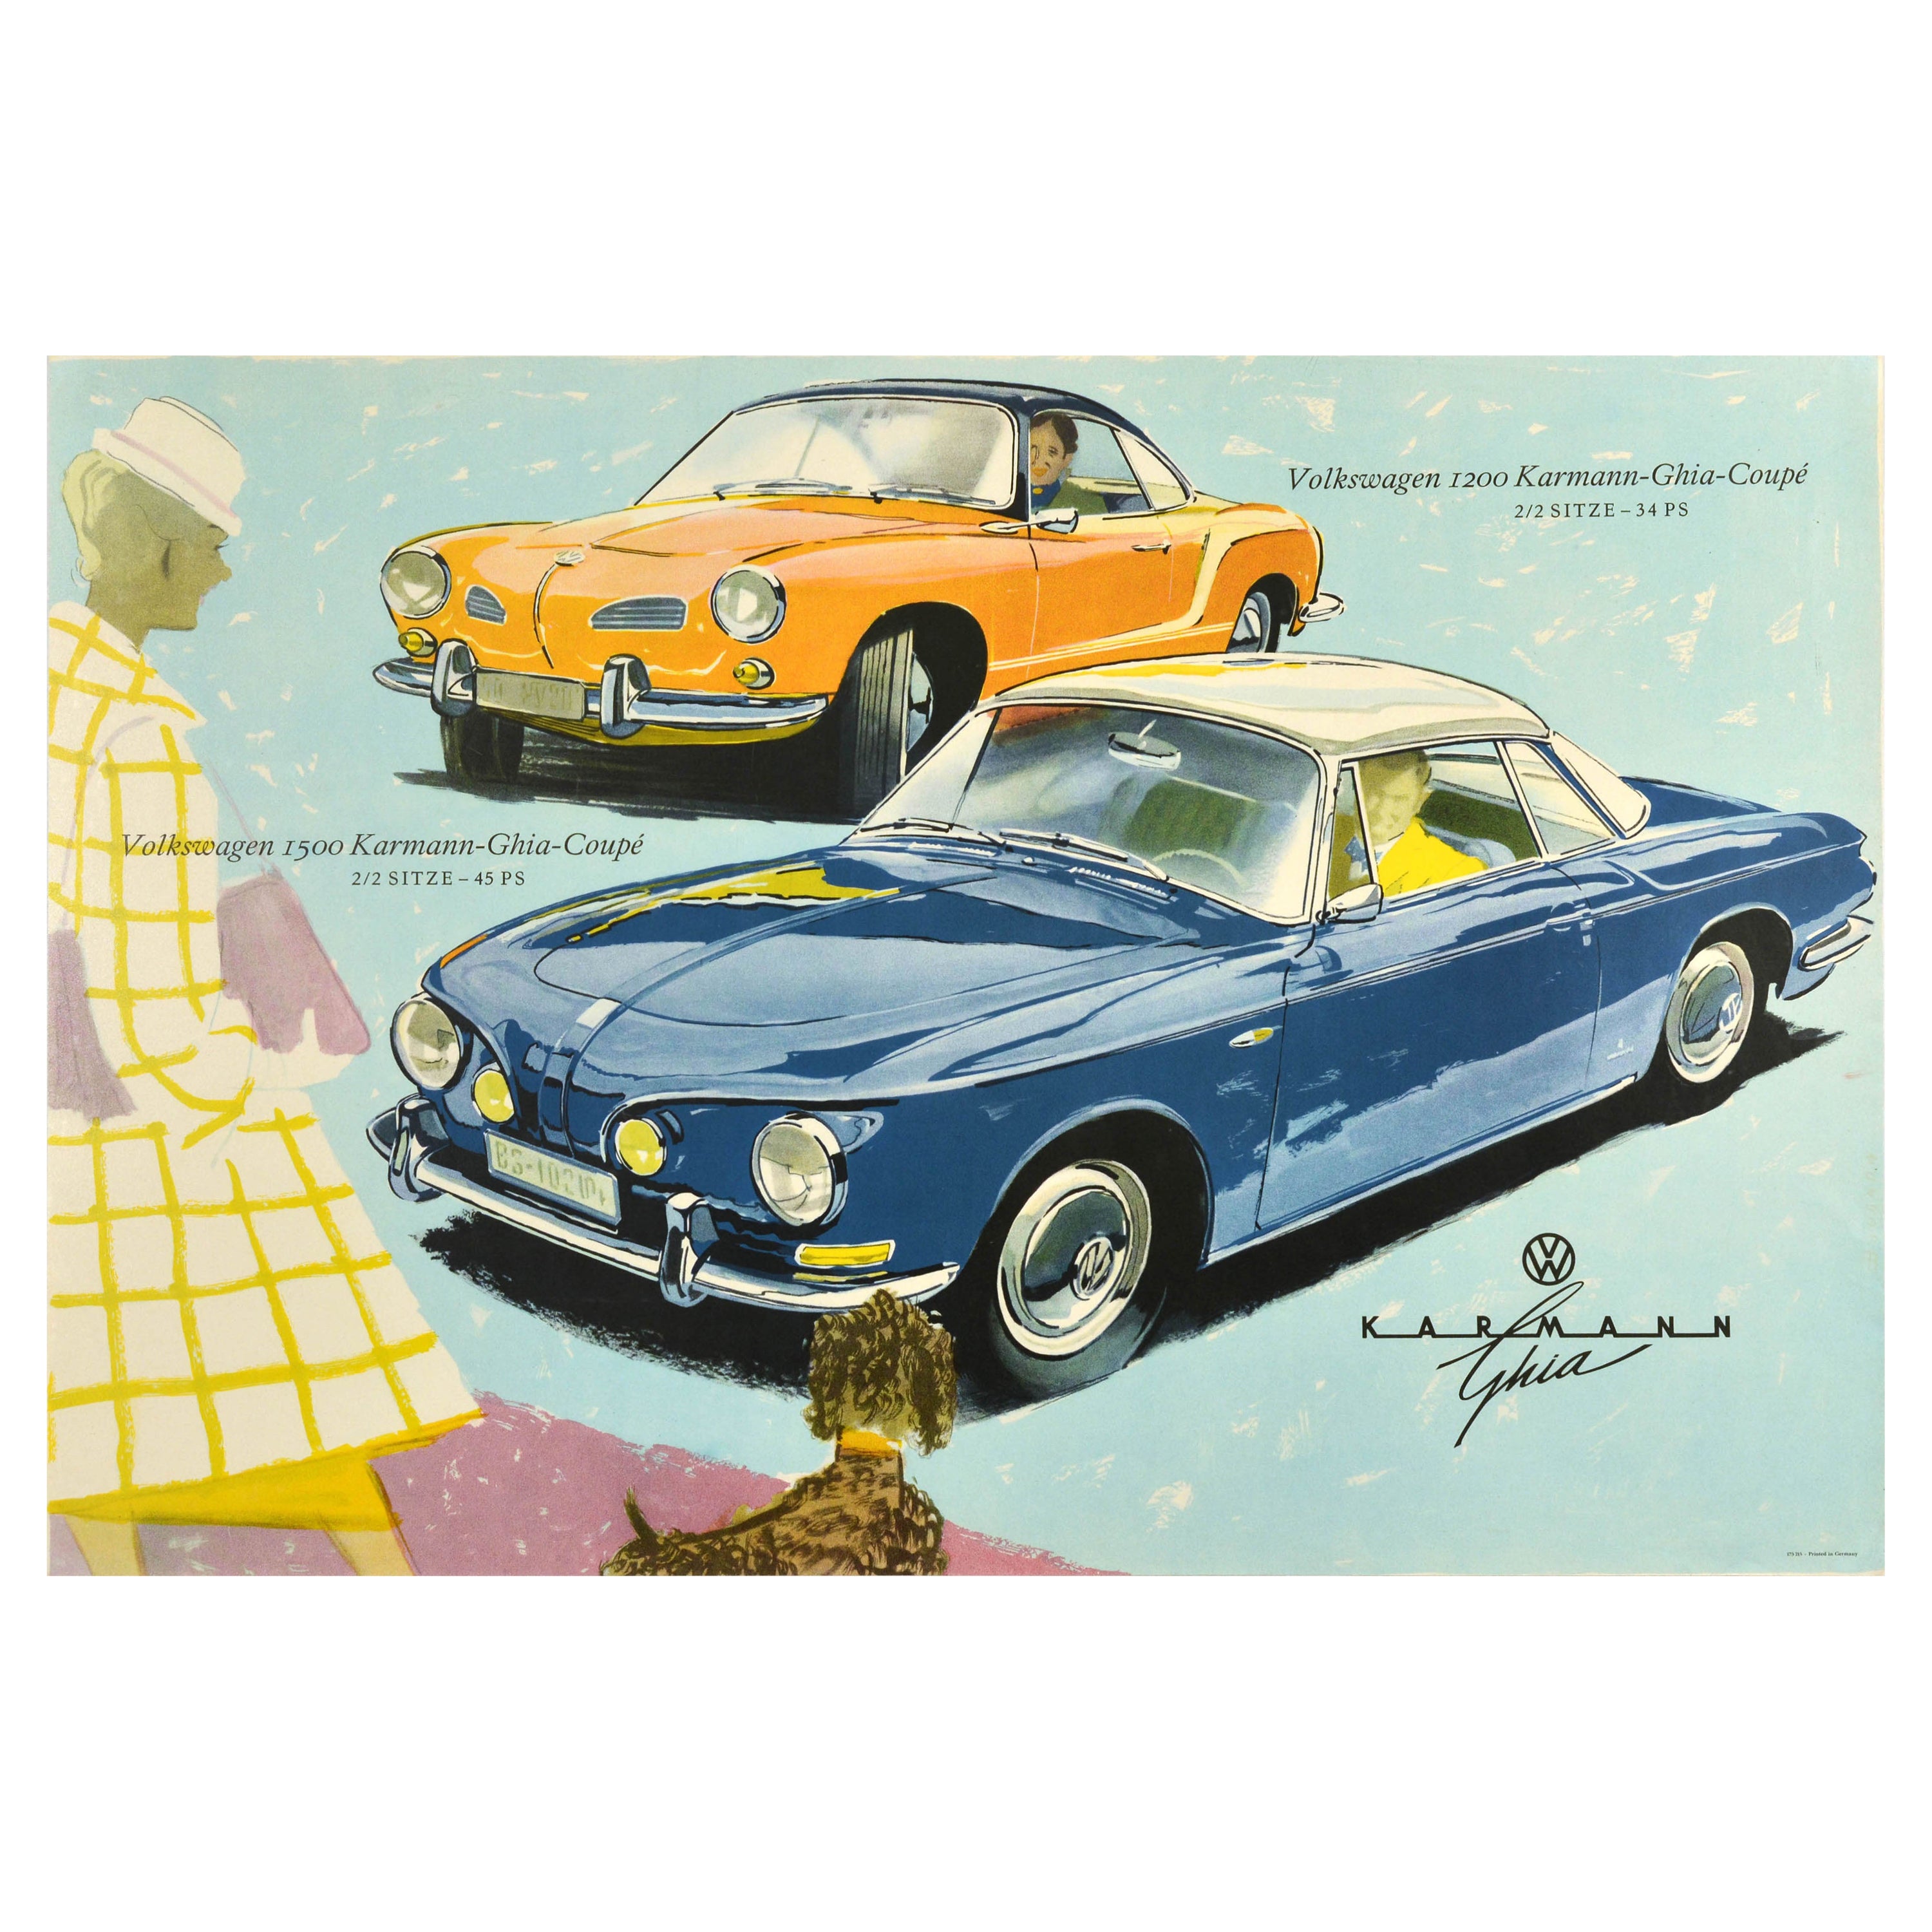 Original Vintage VW Car Advertising Poster Volkswagen Karmann Ghia Automobile For Sale